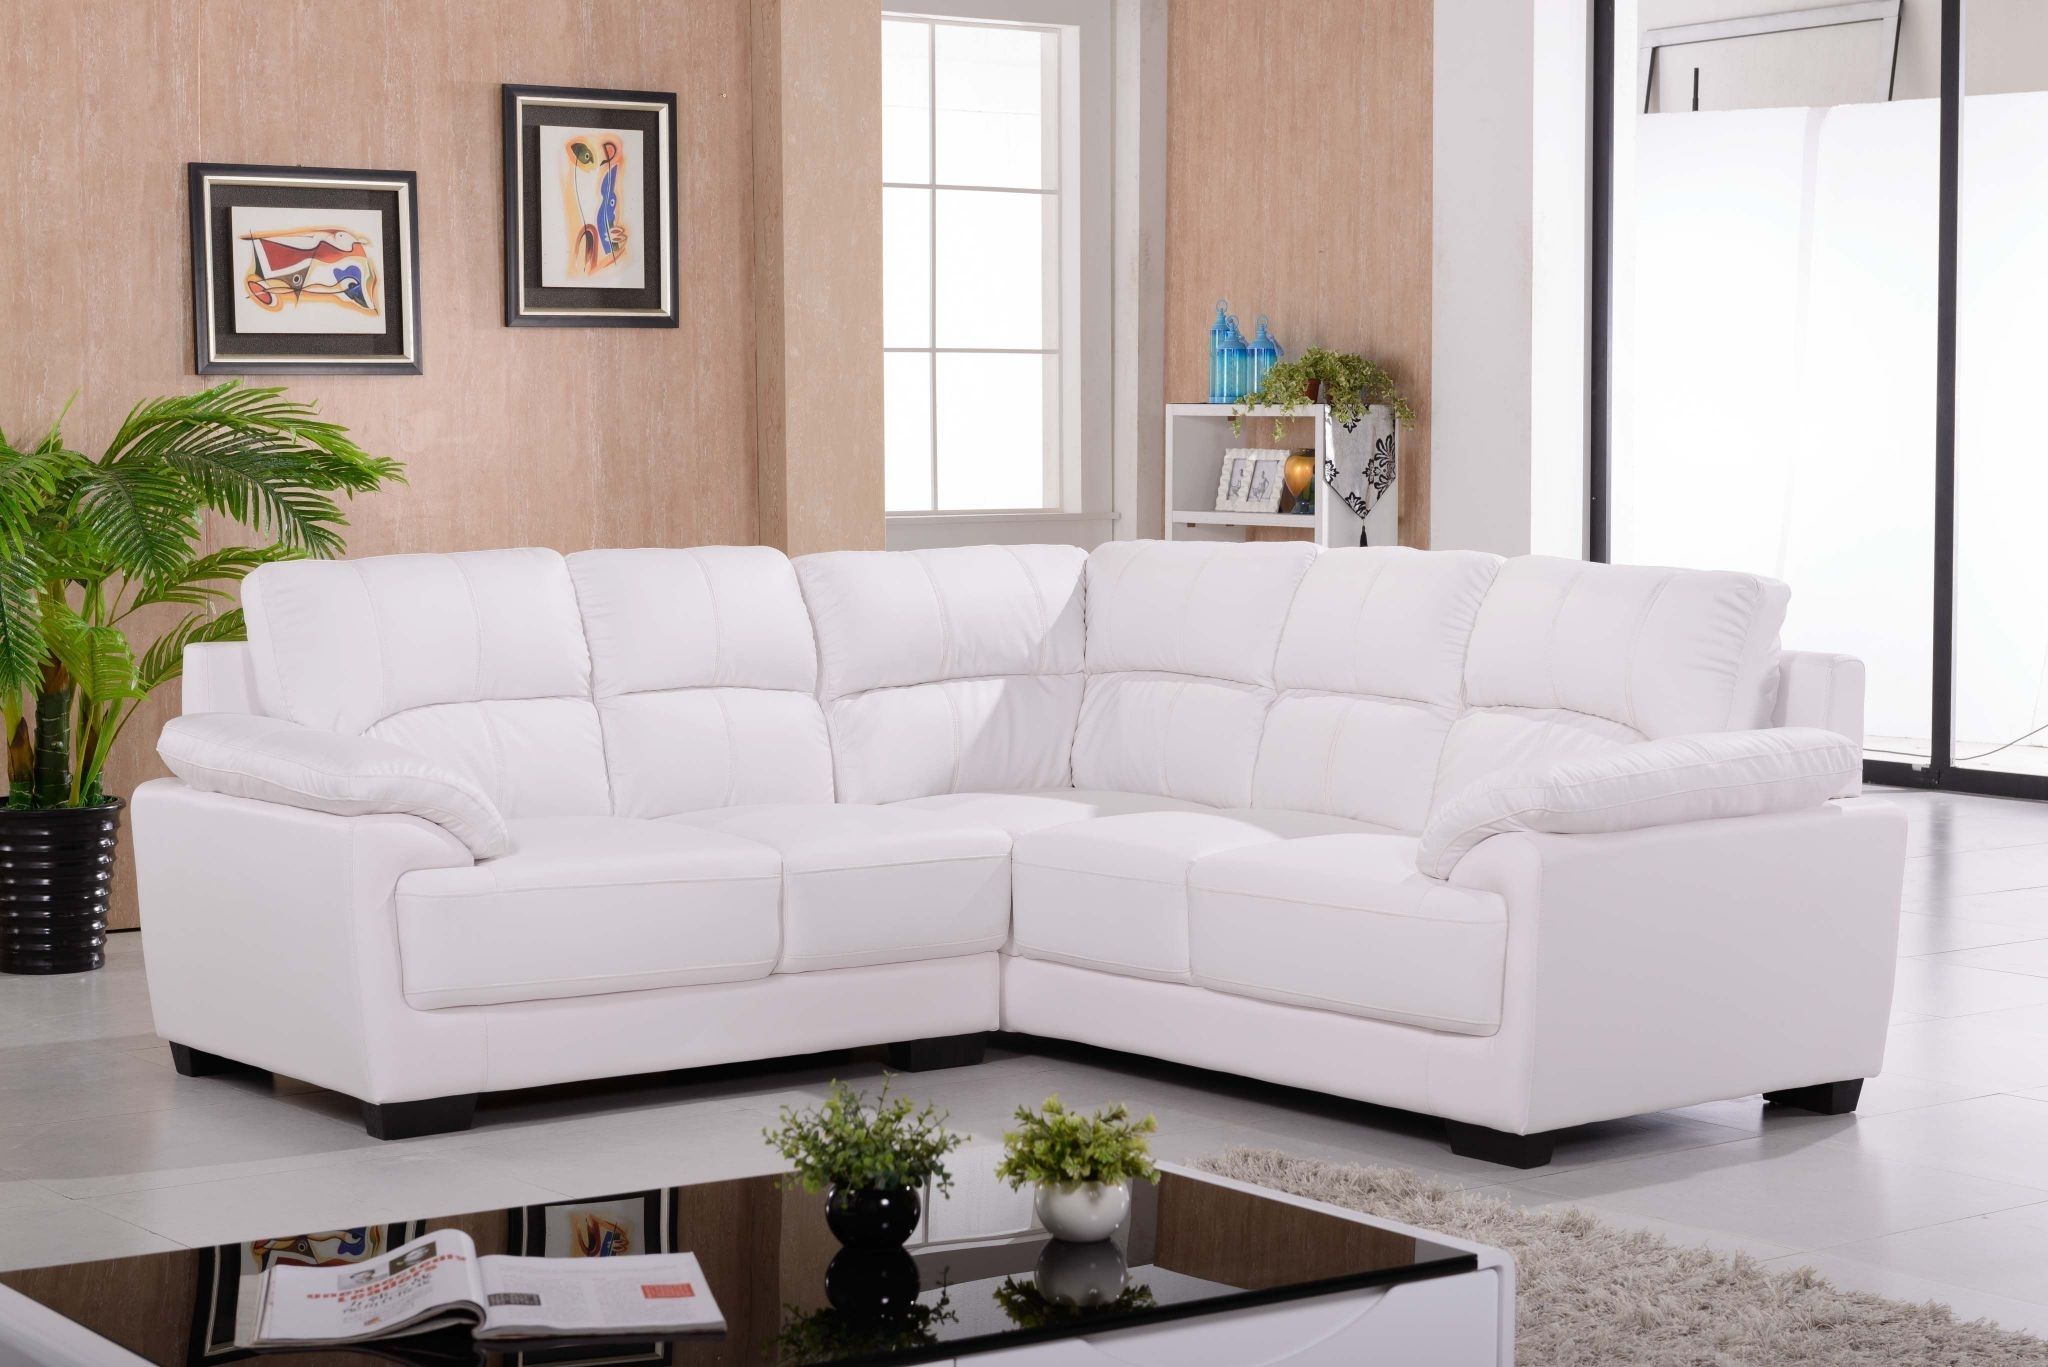 leather sofa white color